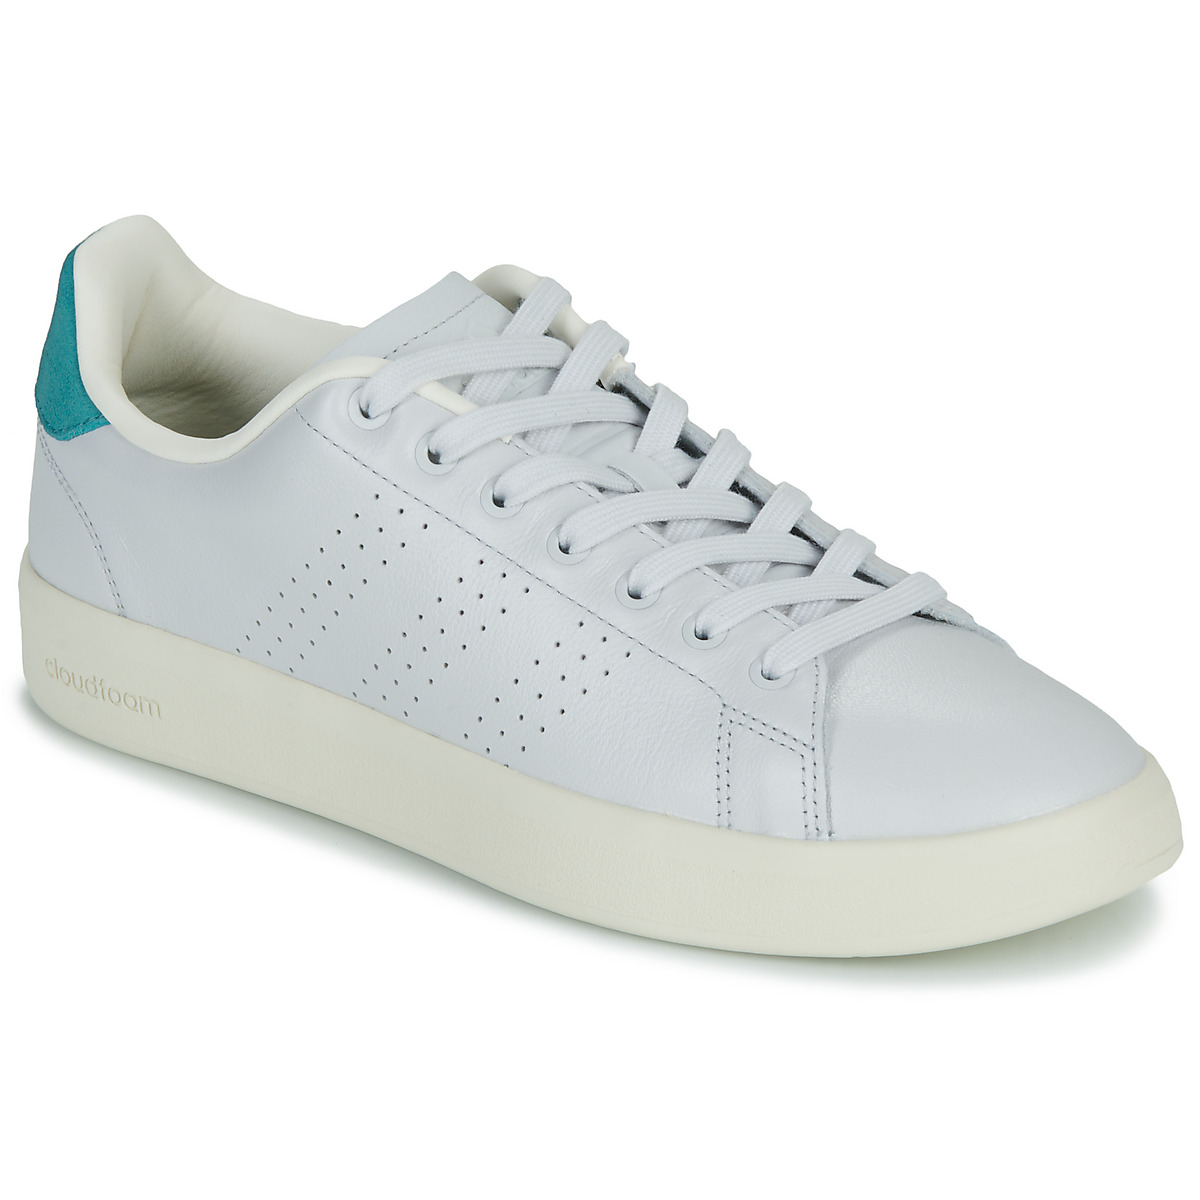 Shoes Low top trainers Adidas Sportswear ADVANTAGE PREMIUM Grey / Blue